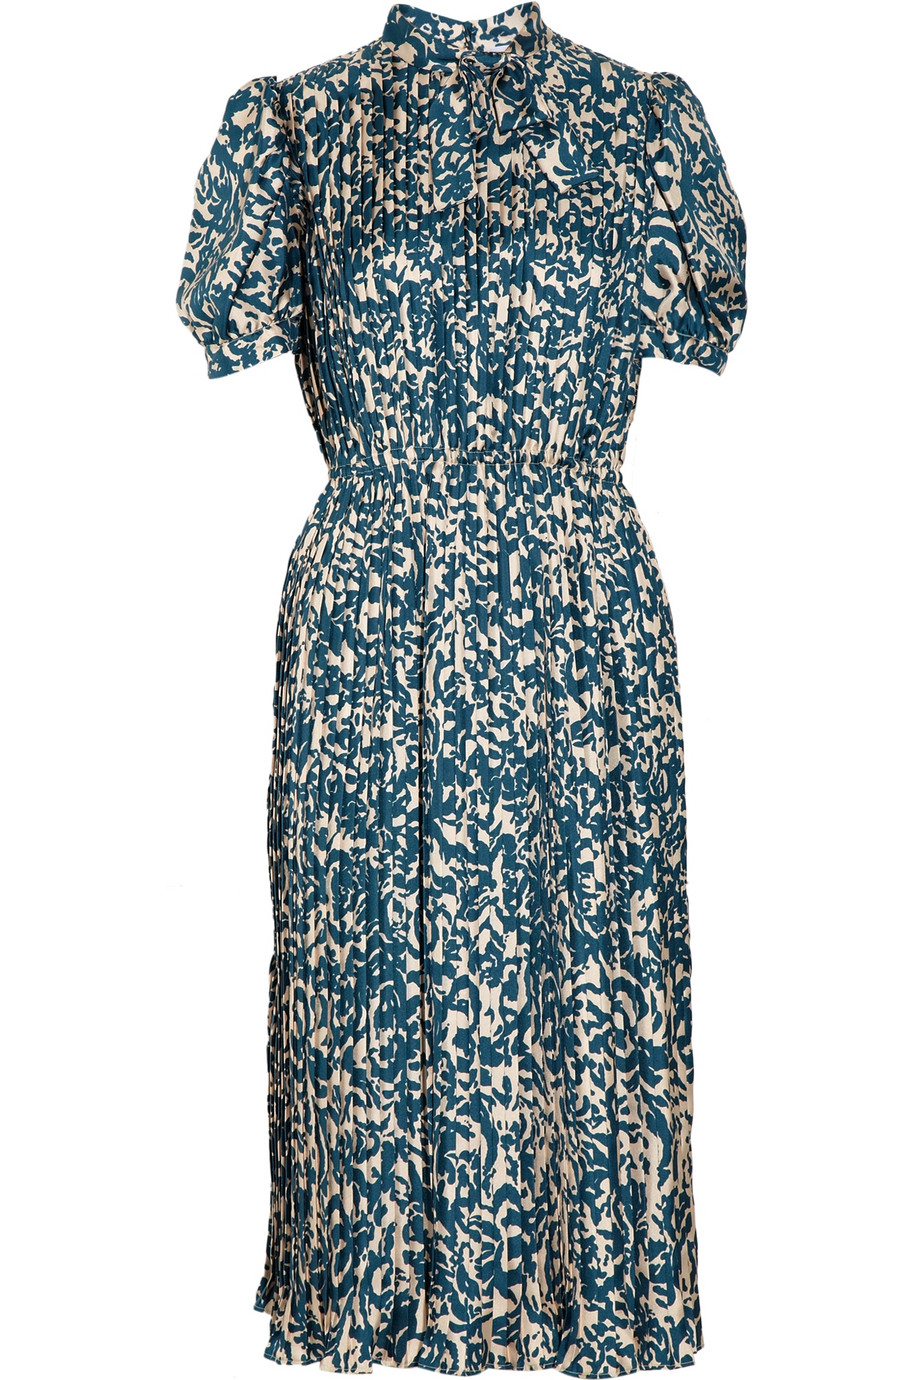 Luisa Beccaria Printed Silk Satin-twill Dress in Blue | Lyst